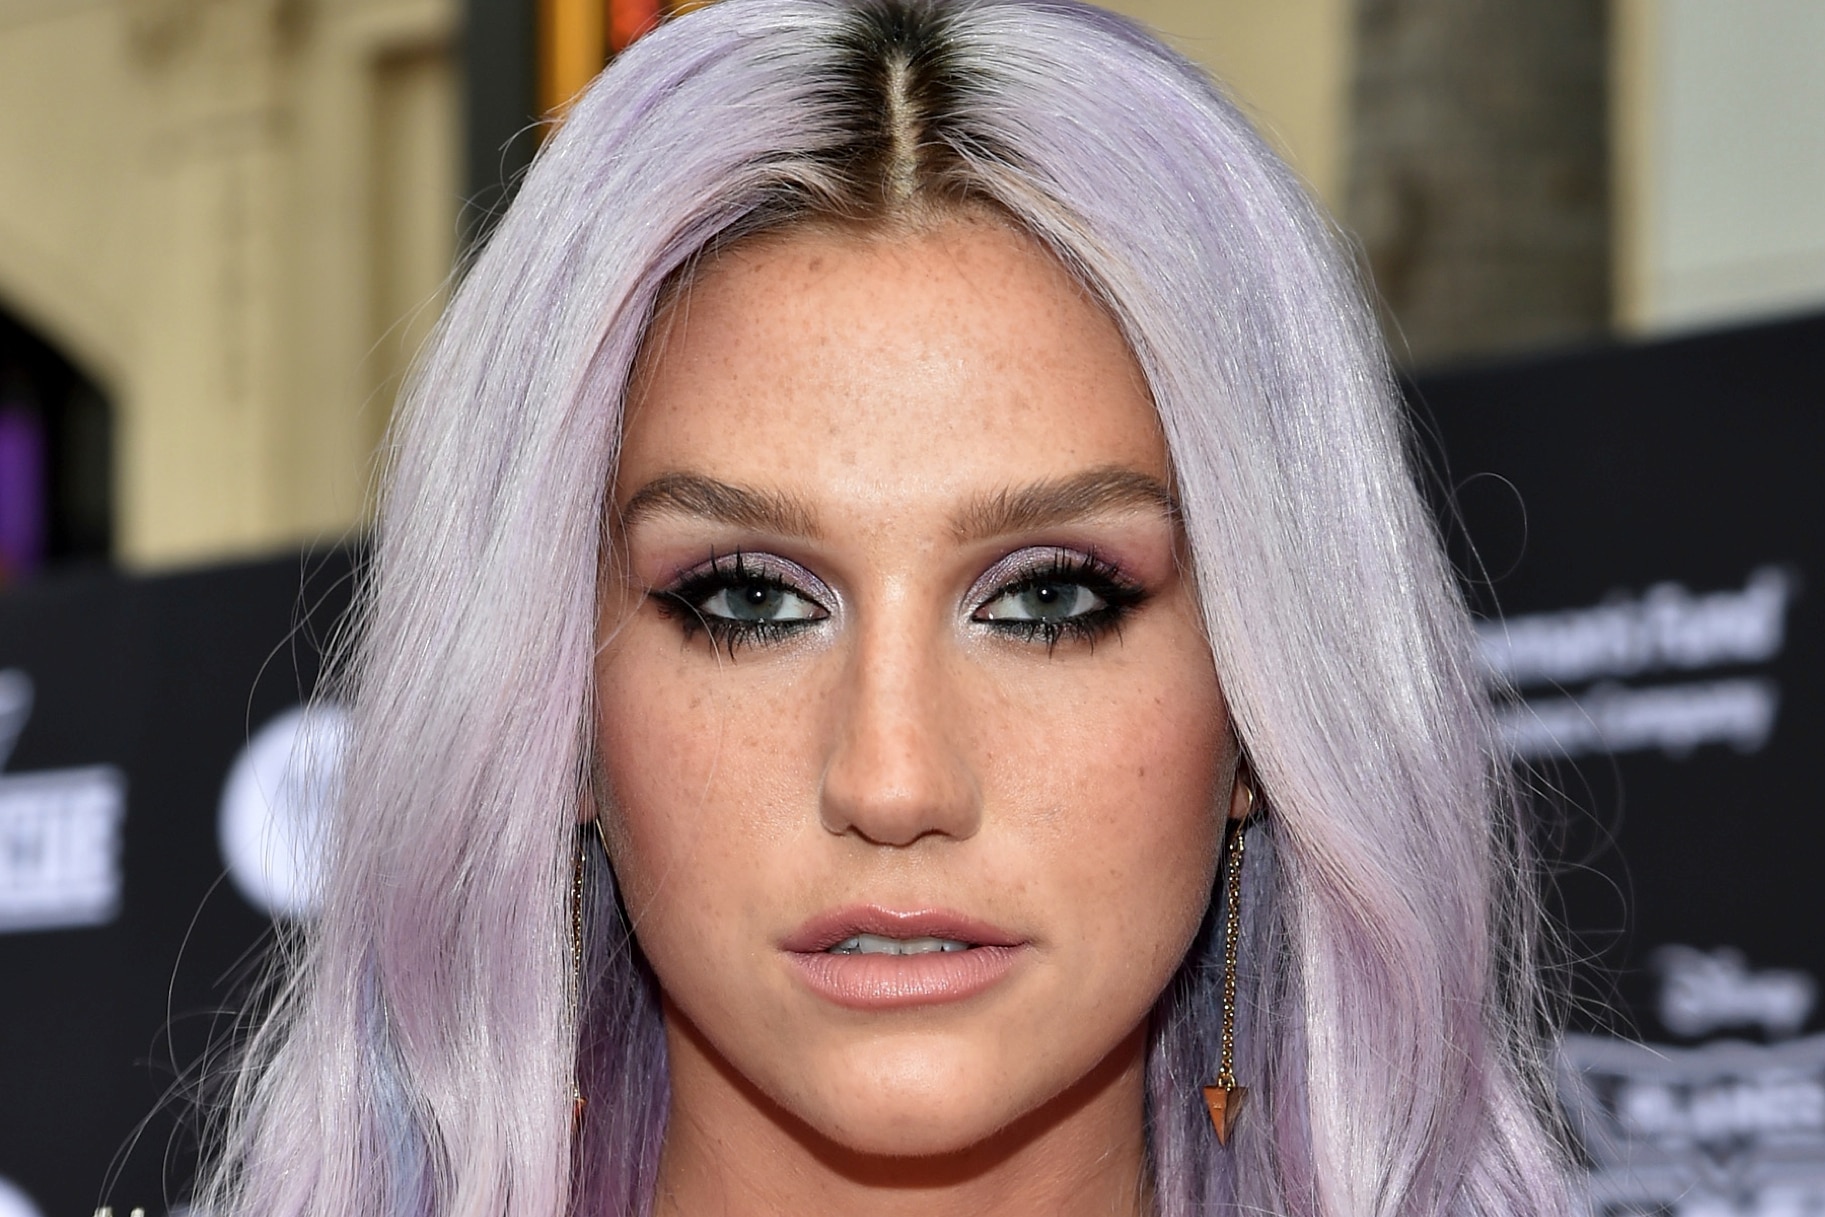 Kesha Sex Video - Kesha Defamed Dr. Luke With Lady Gaga Texts, Judge Rules | Crime News